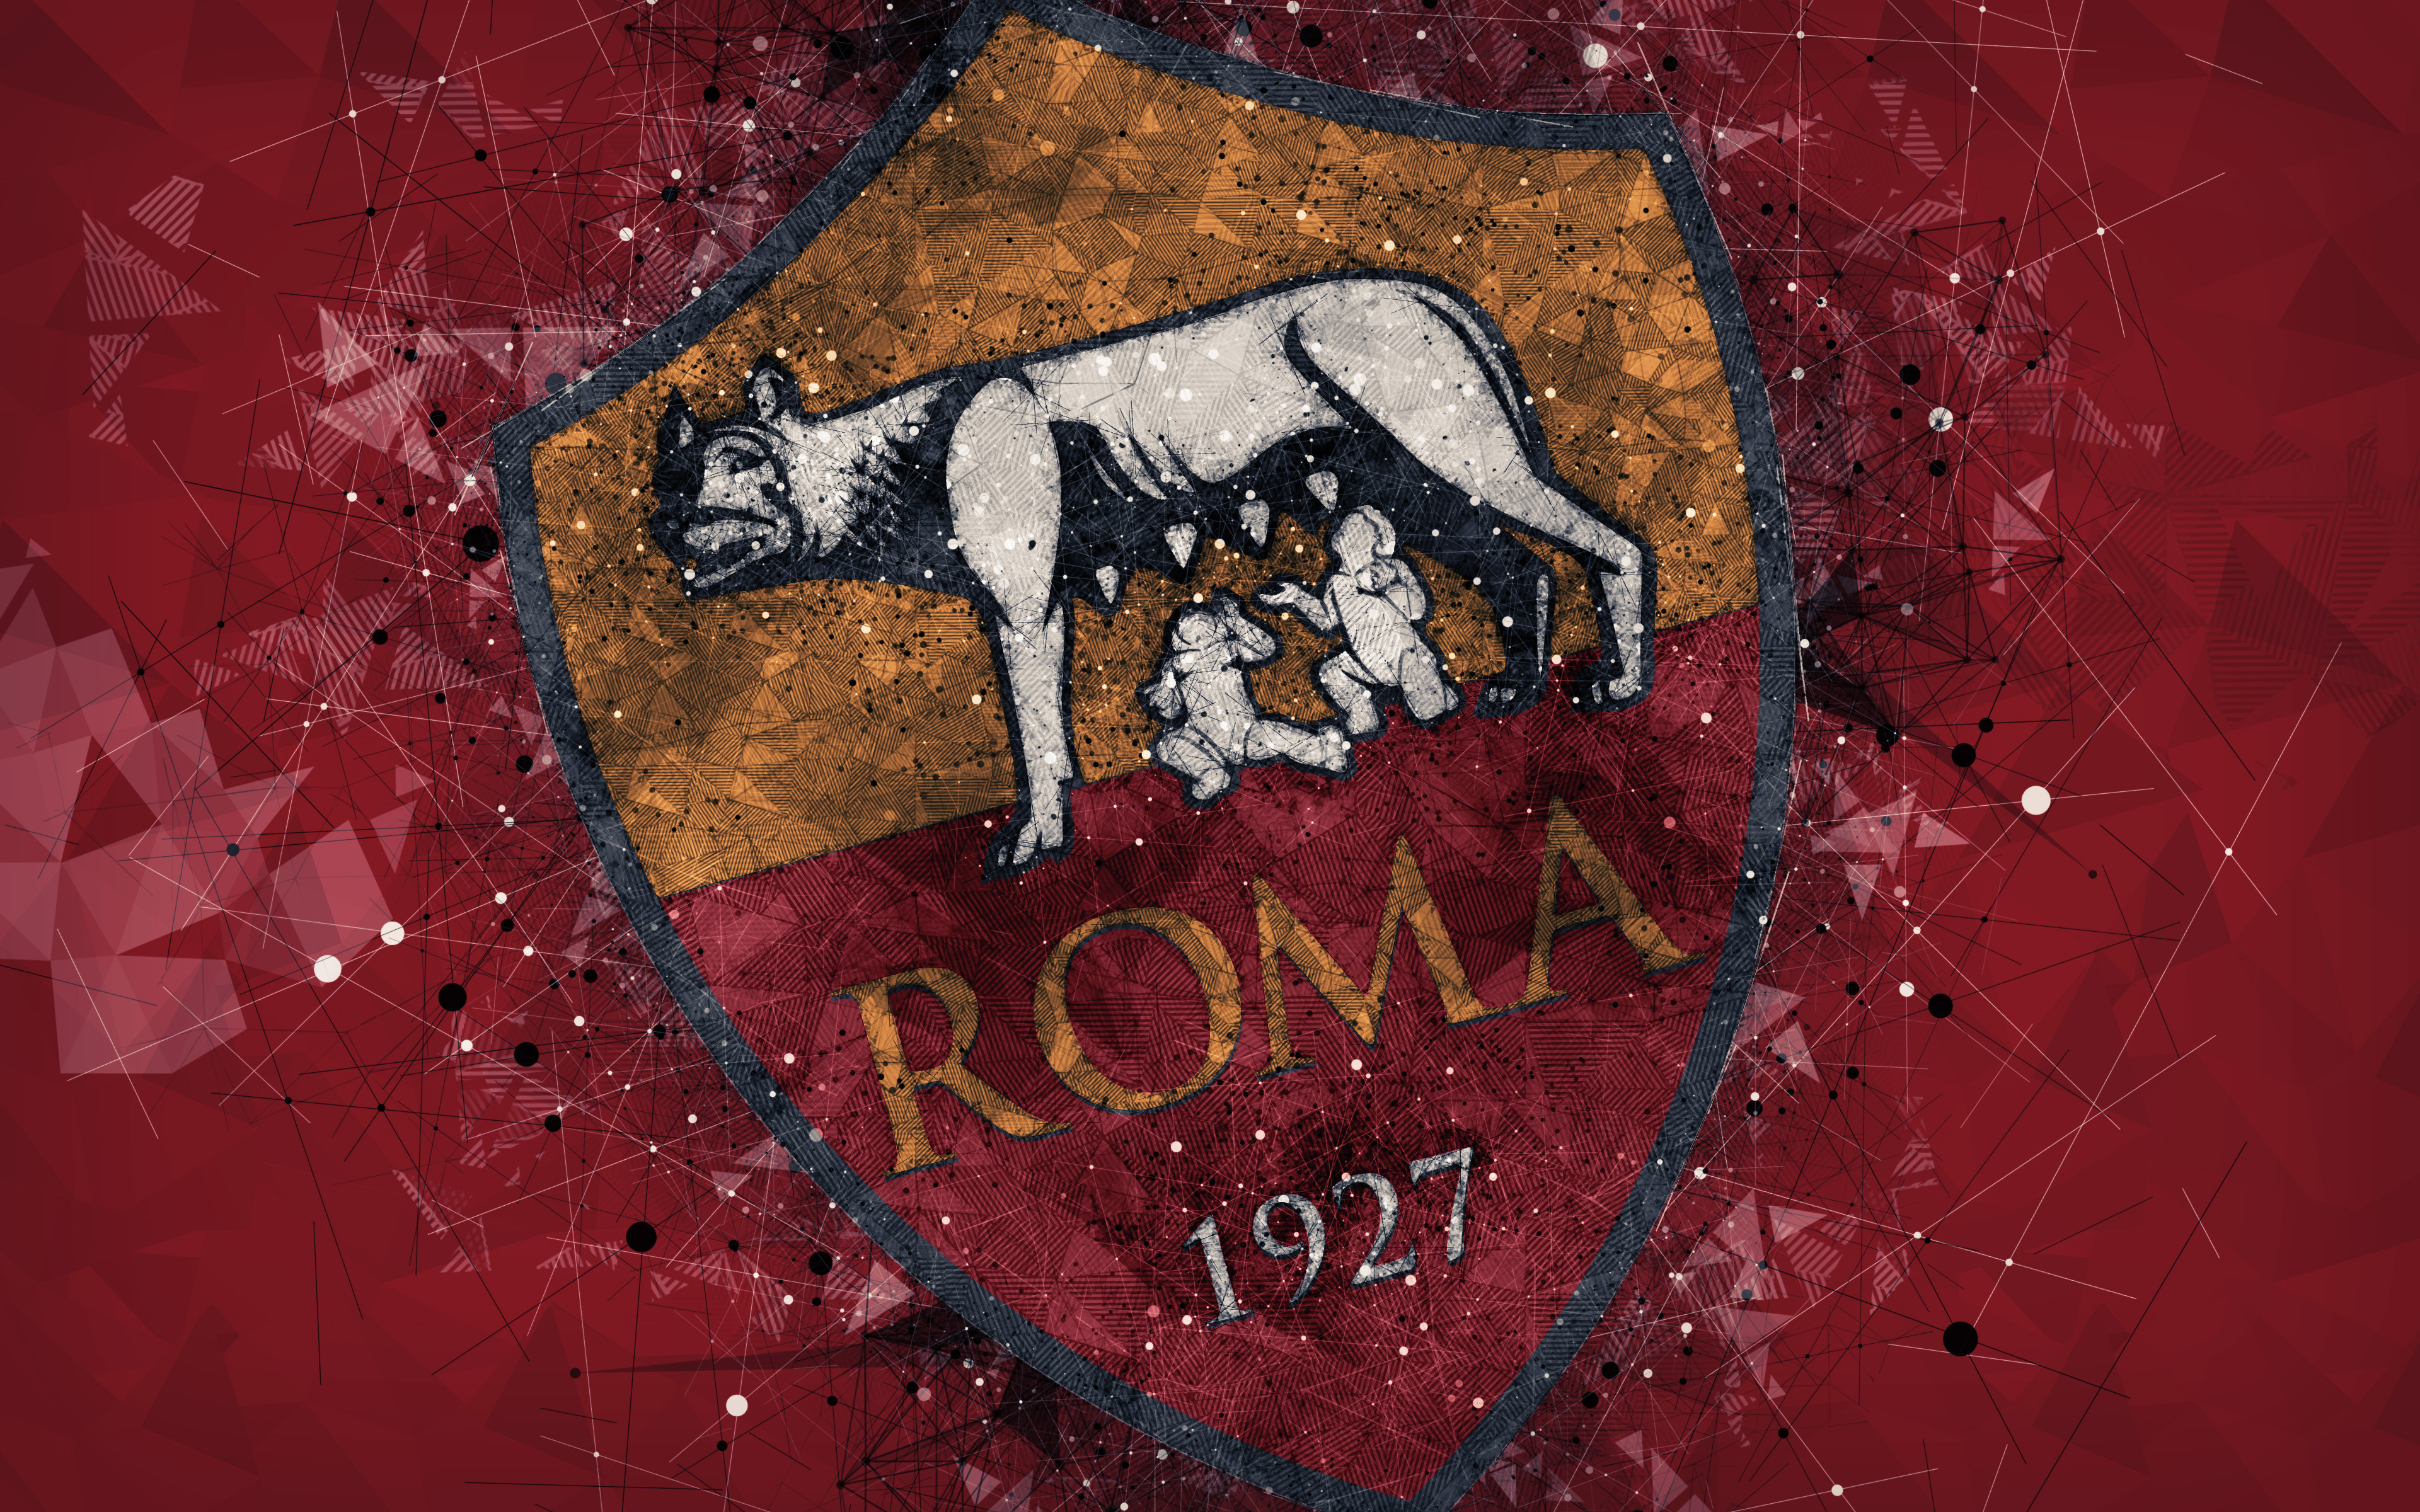 A S Roma Logo Soccer 3840x2400